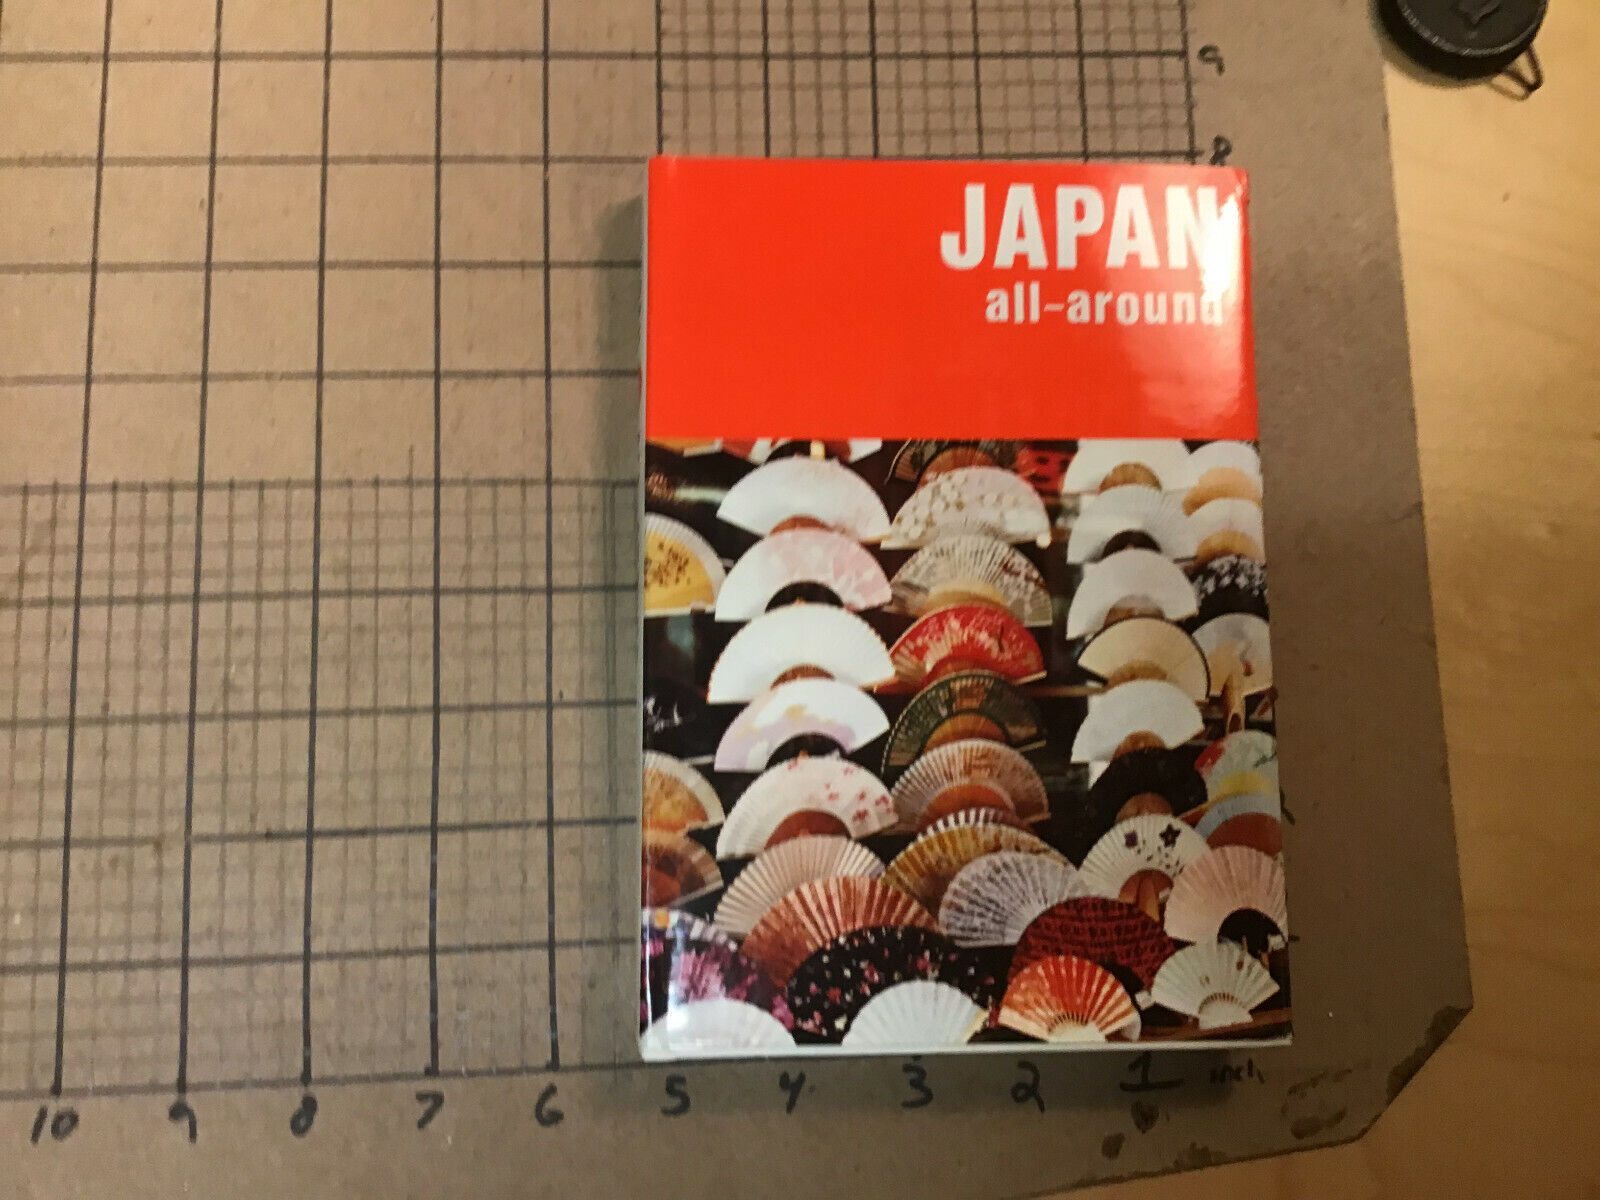 HIGH GRADE Vintage Travel book: JAPAN all-around 1970 - Miura printing